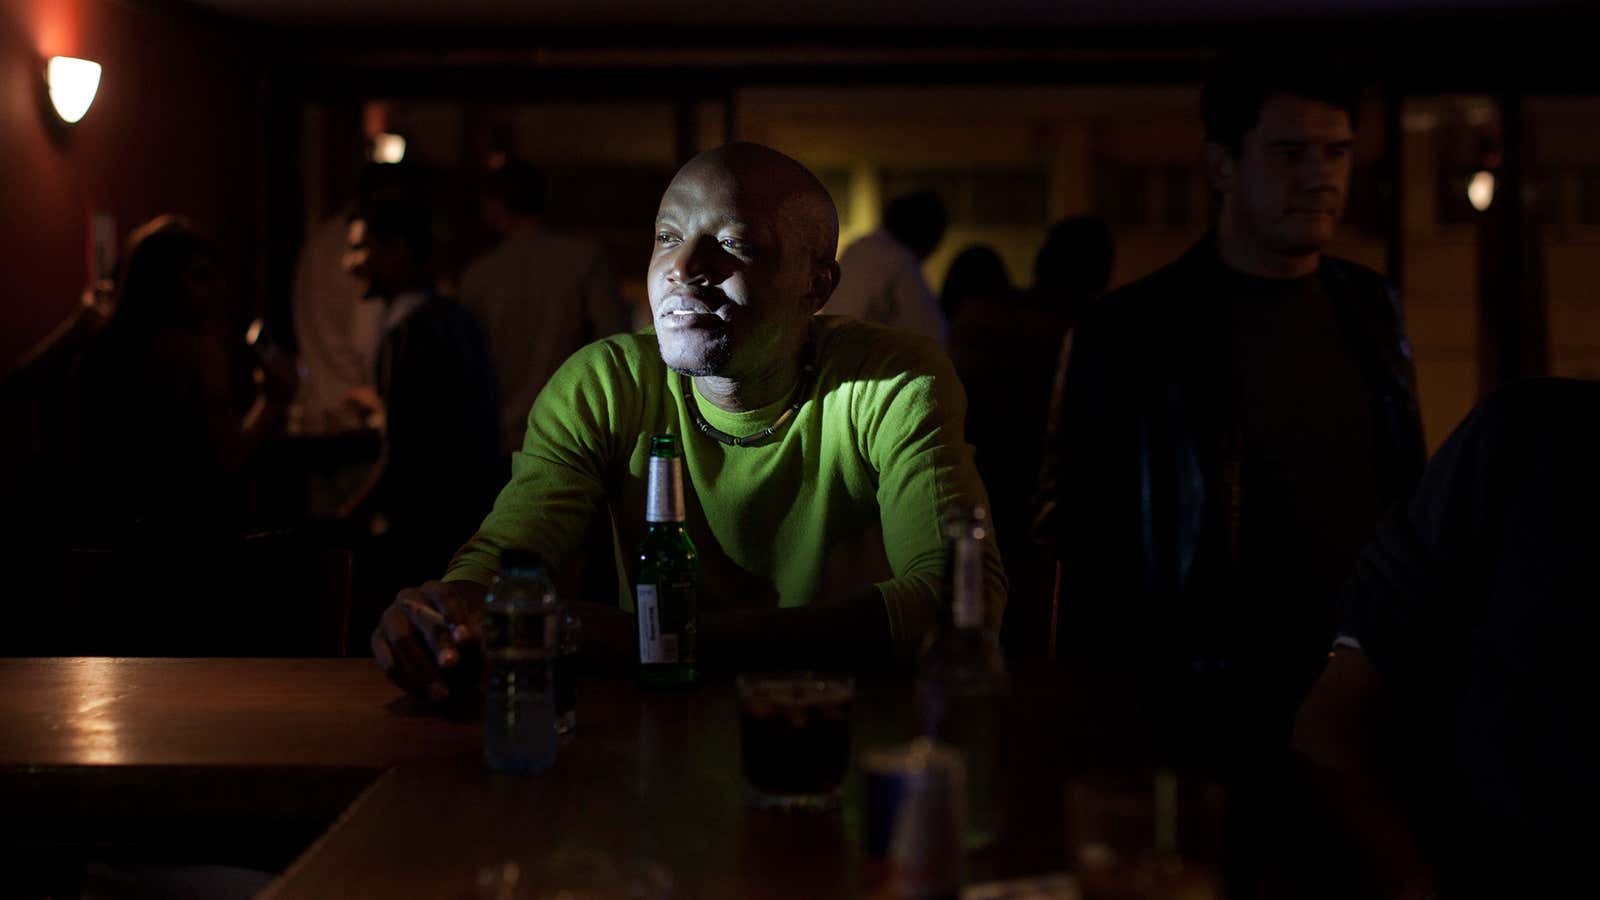 Luseno introduced the photographers to Nairobi’s nightlife